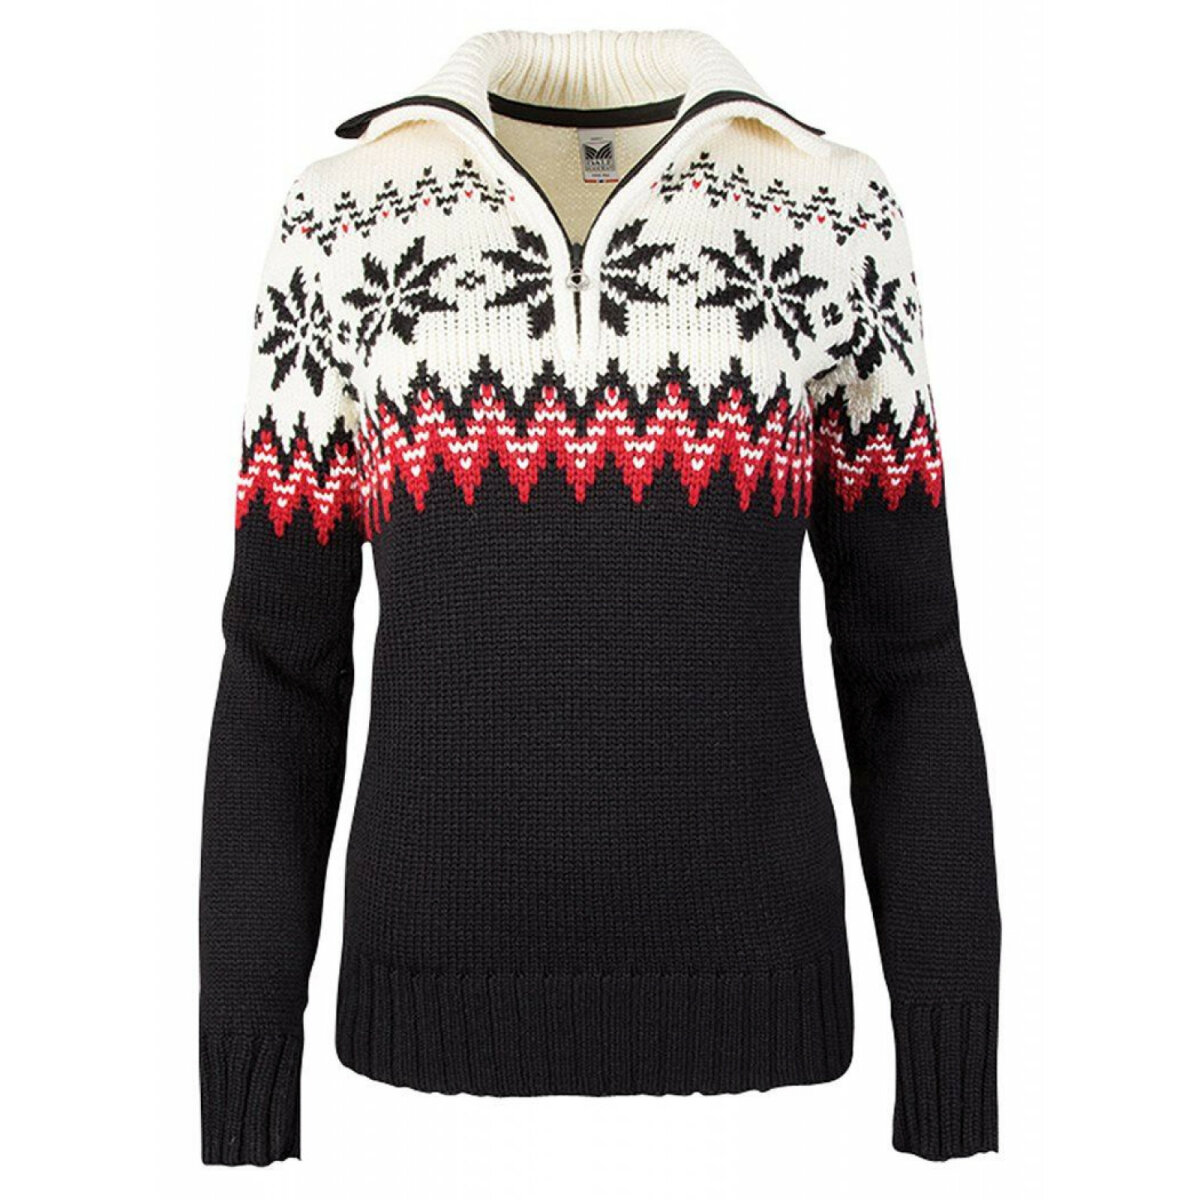 Myking Womens Sweater Black by Norway - COLDSEASON.com, € 329,90 of Dale